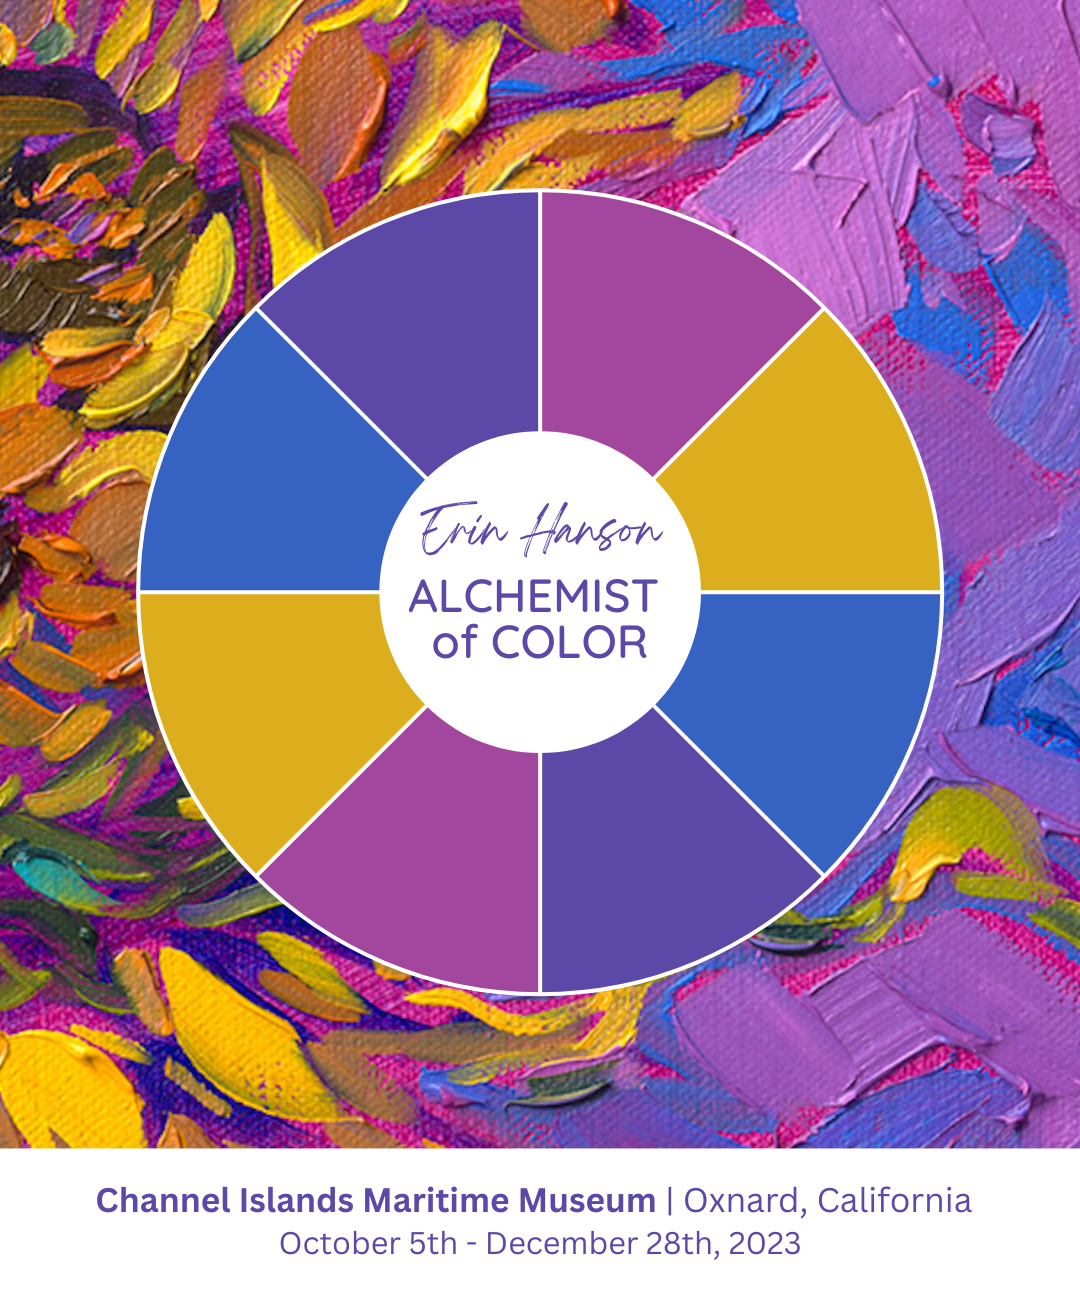 Erin Hanson: Alchemist of Color Exhibition